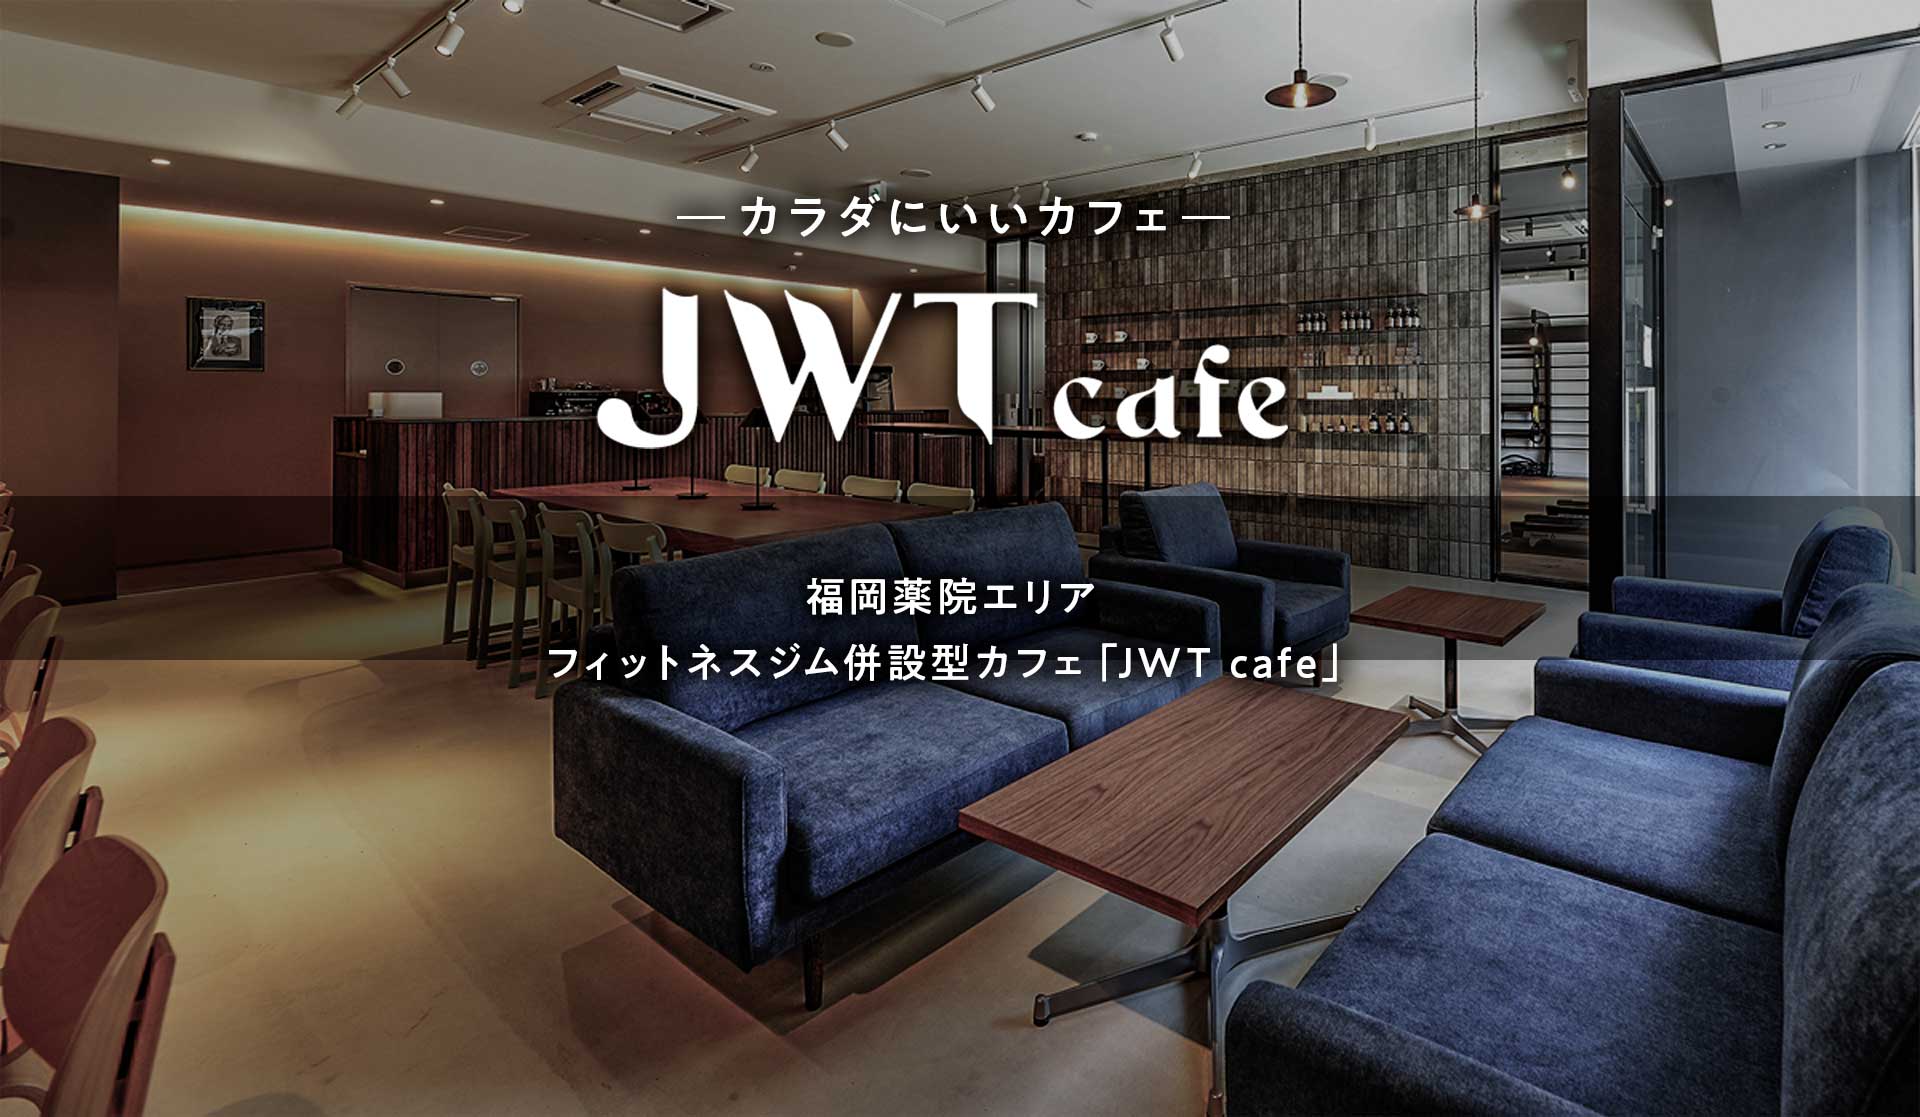 JWT cafe メインビジュアル